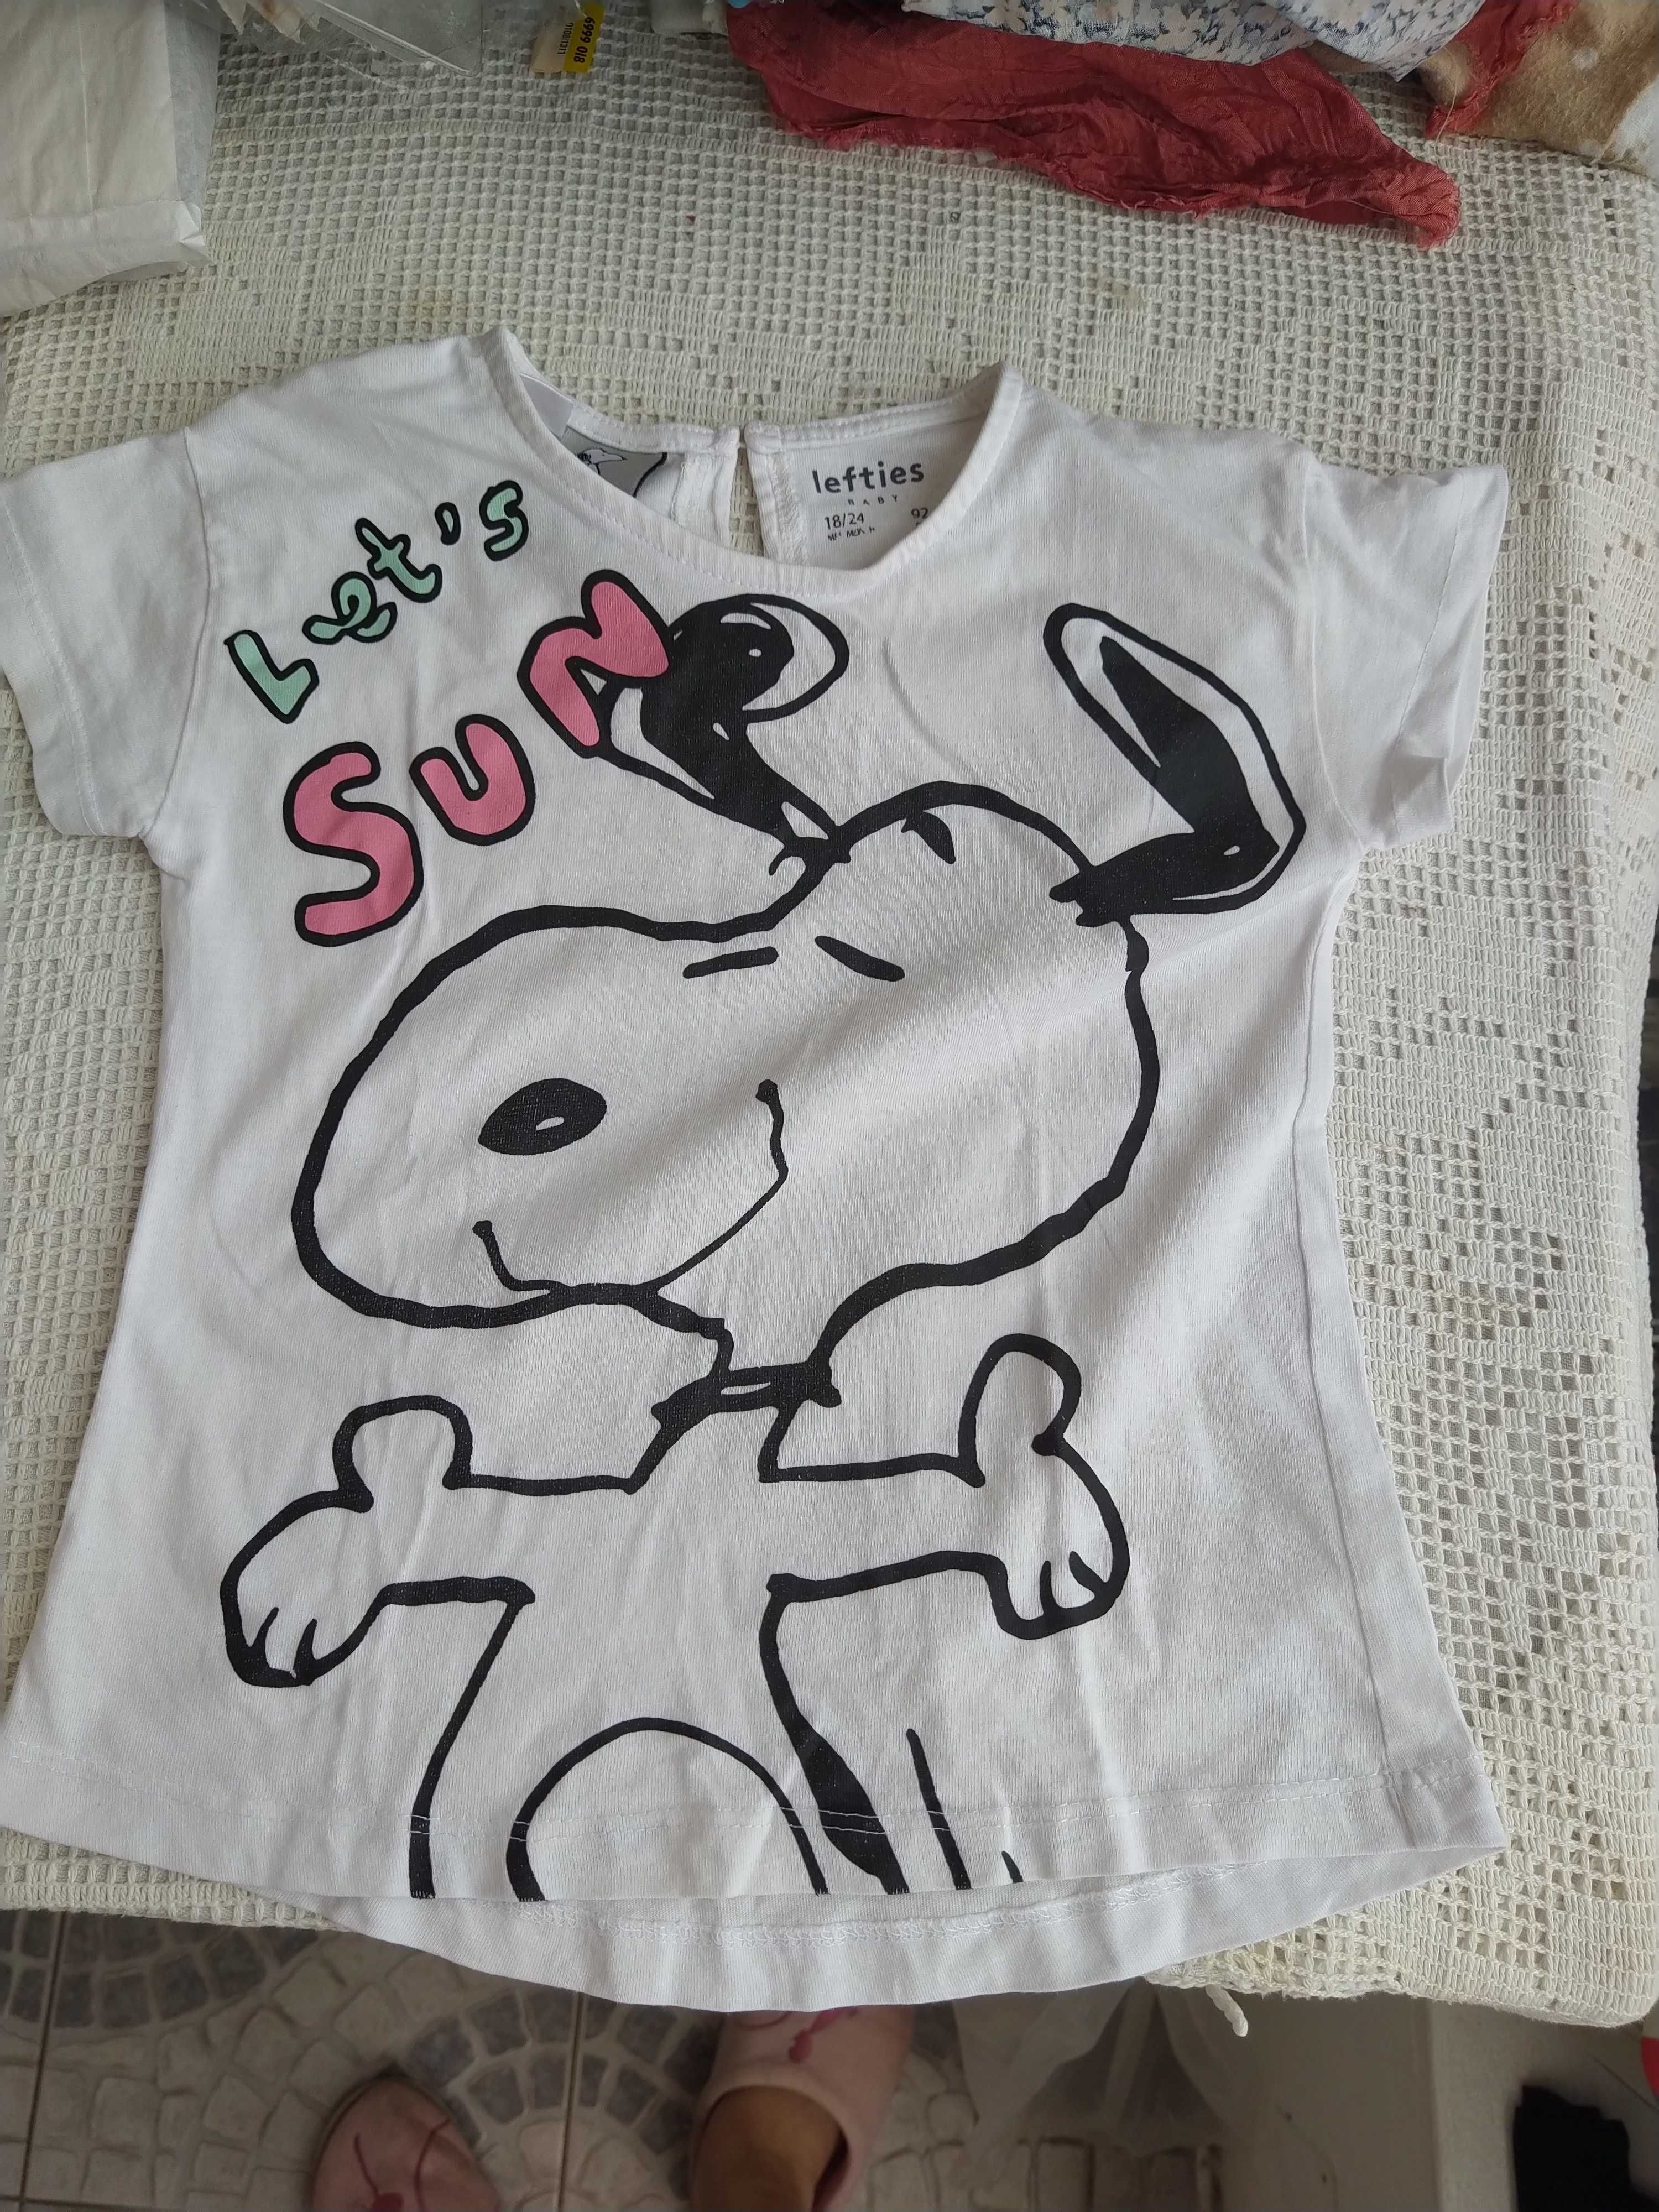 Blusa do Snoopy - Lefties - 18 - 24 meses - 92 cm